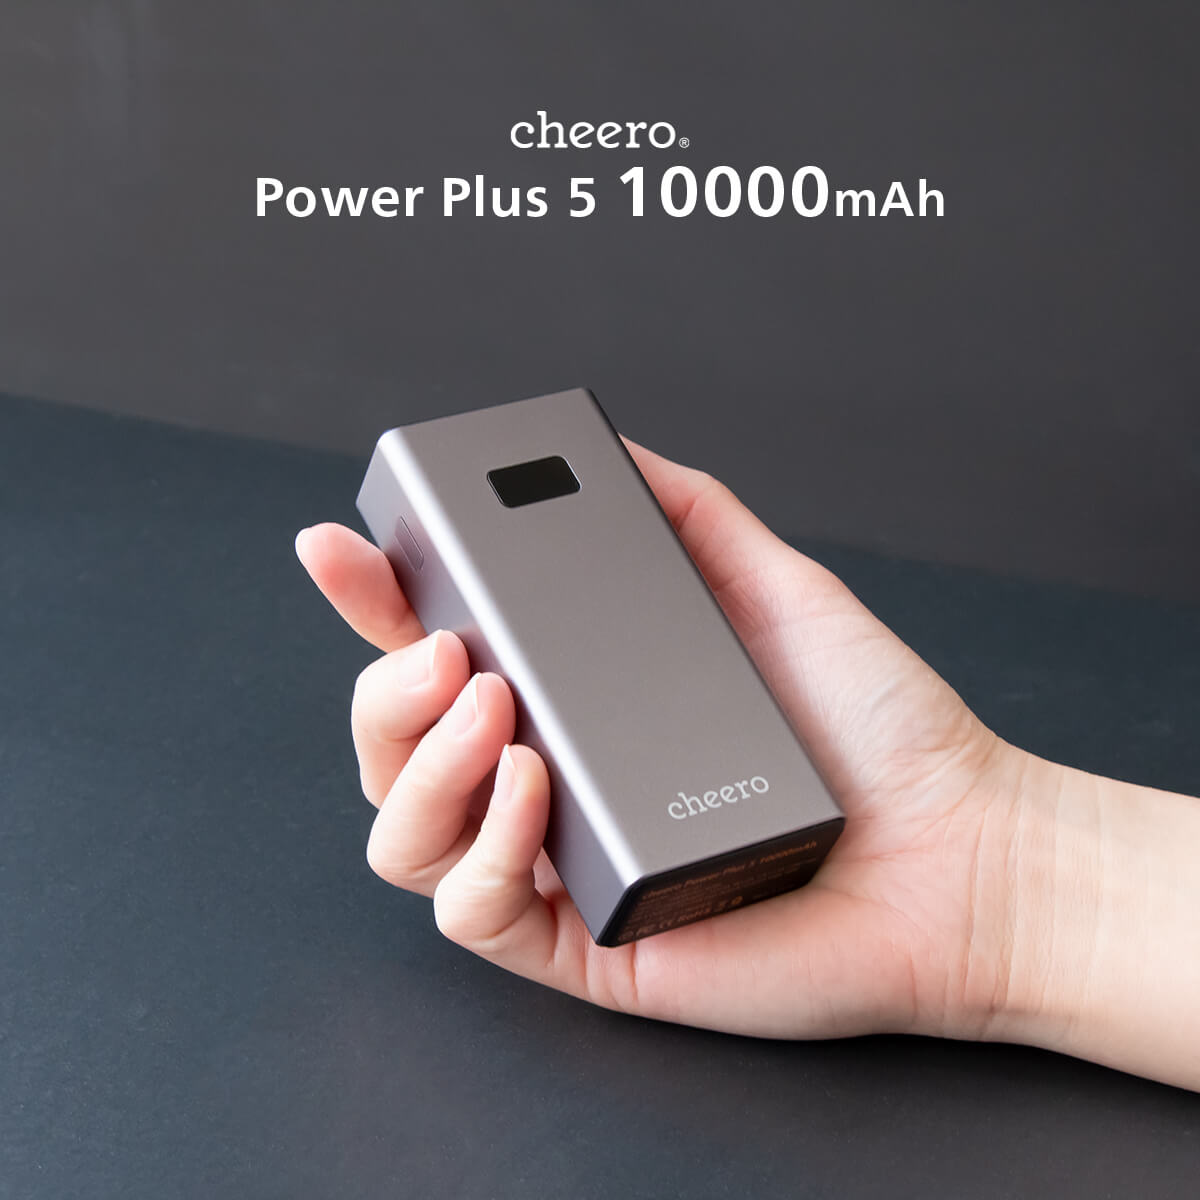 cheero、新型モバイルバッテリー｢cheero Power Plus 5 10000mAh with Power Delivery 18W｣を本日発売 − 初回500個限定で500円オフに